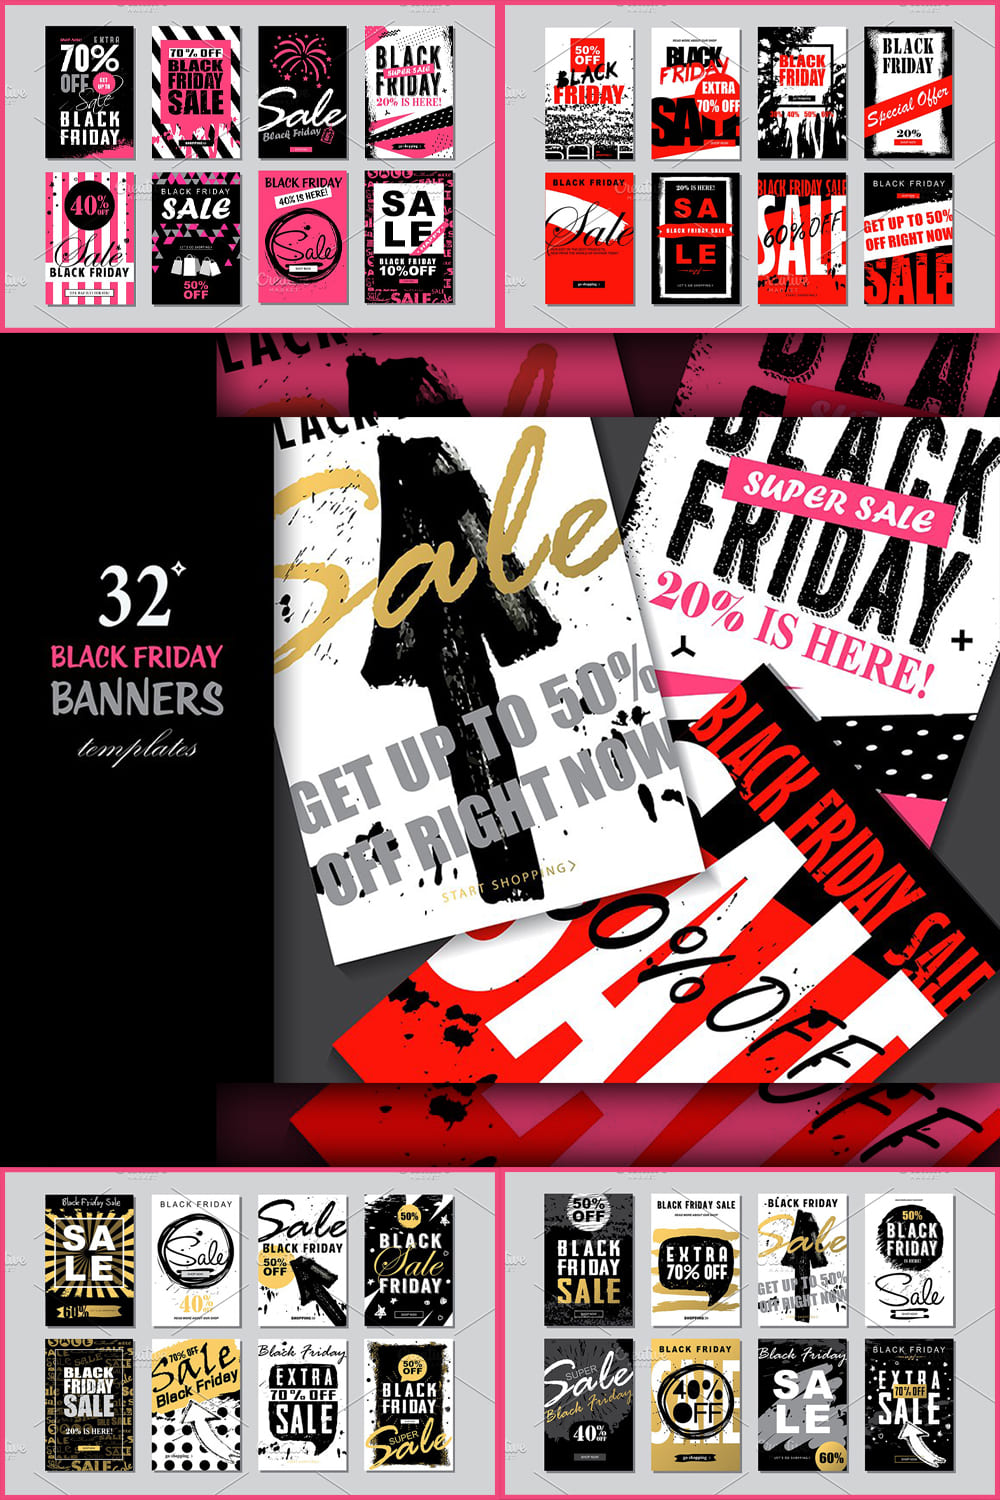 Black Friday Banners Templates - Pinterest.